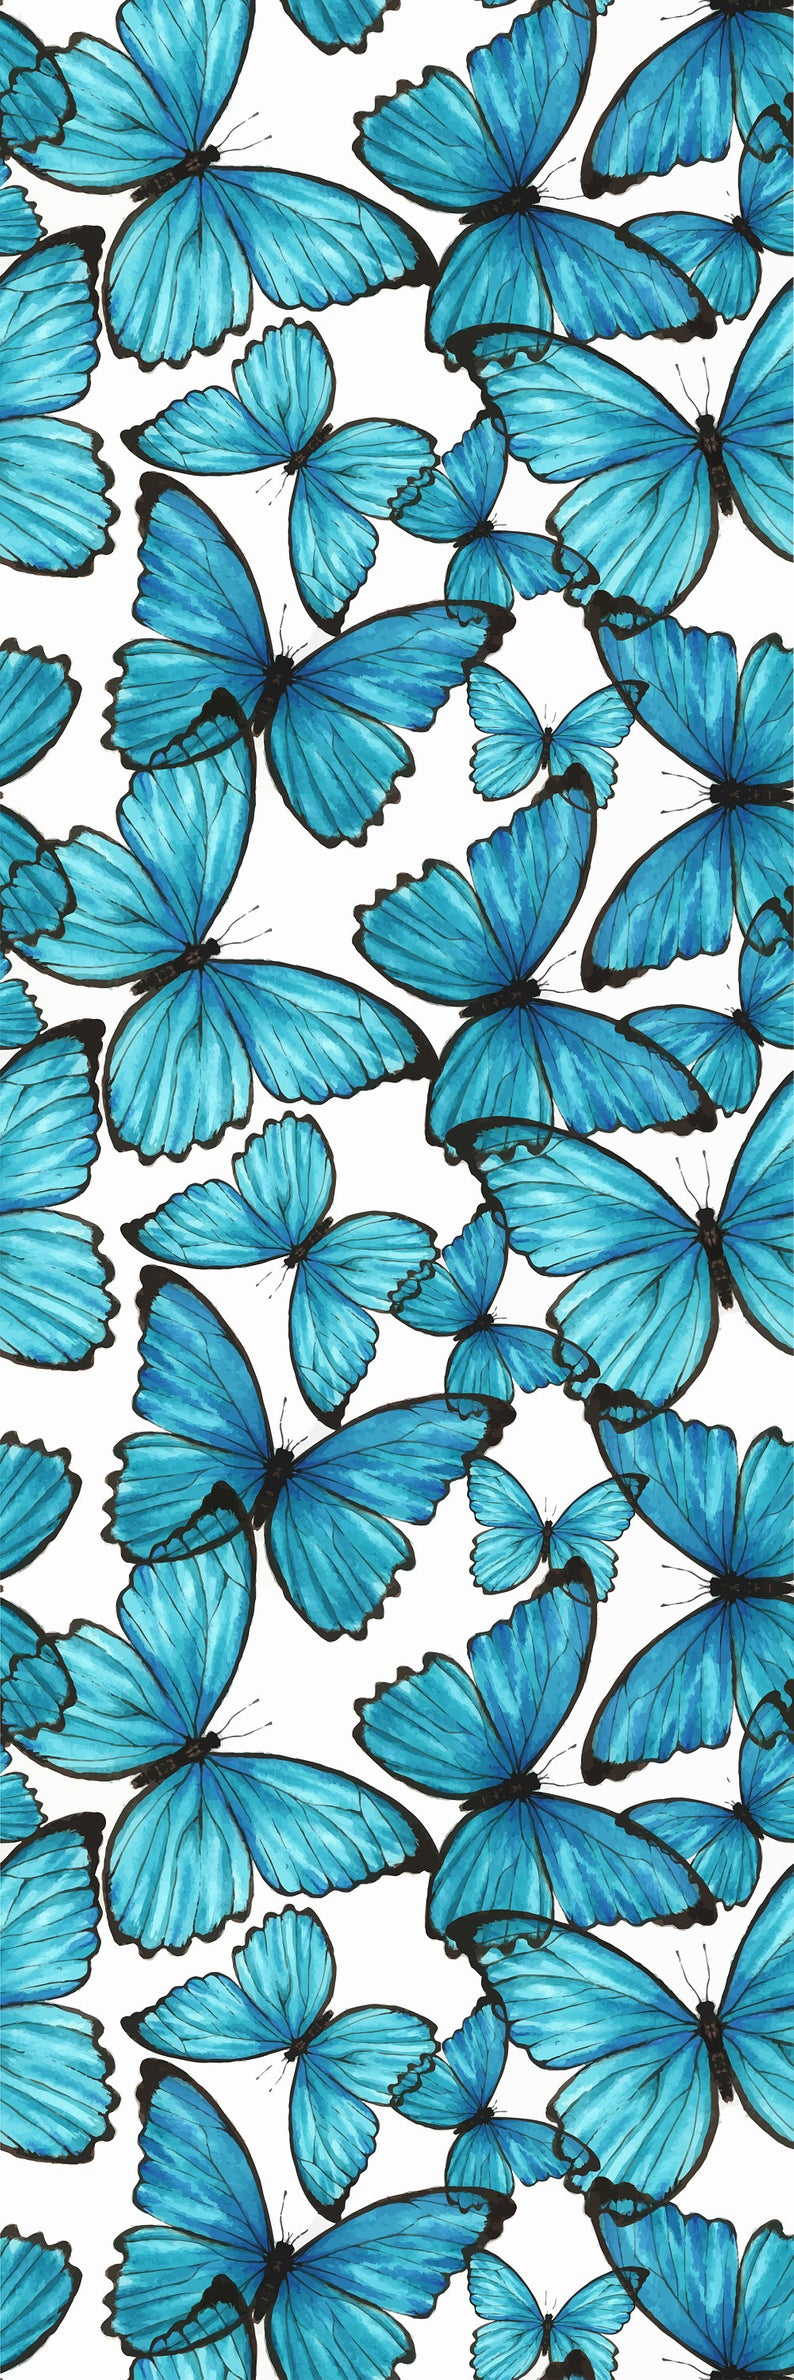 Removable Wallpaper Self Adhesive Blue Butterflies Nursery